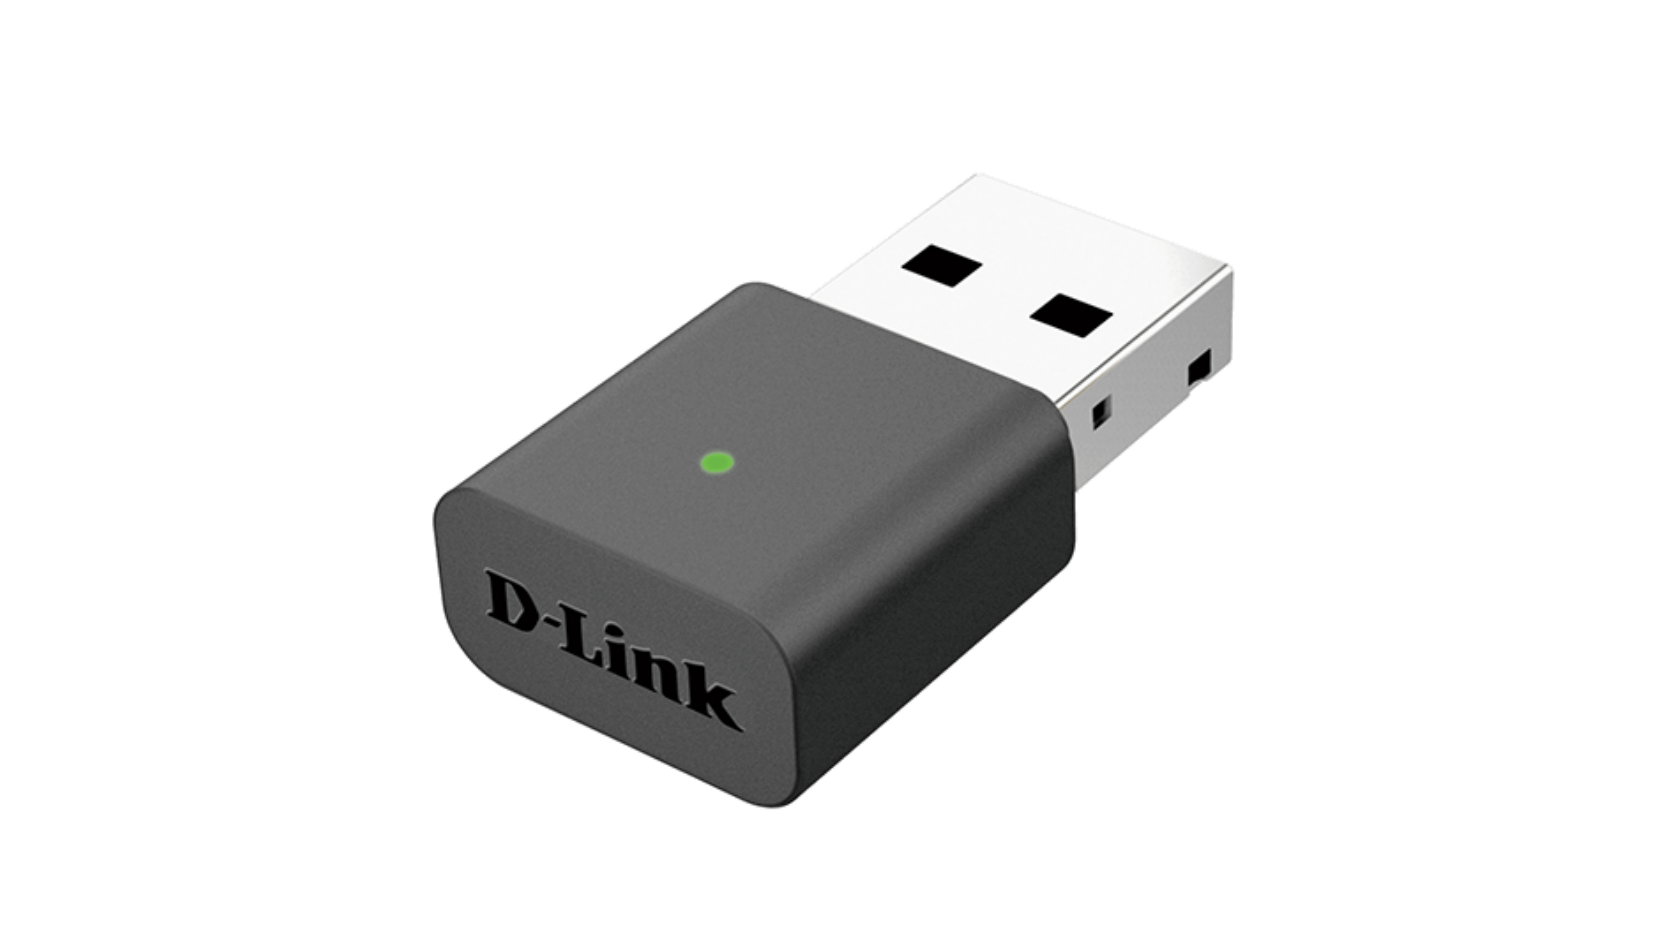 D-Link DWA-131 N300 無線網路卡